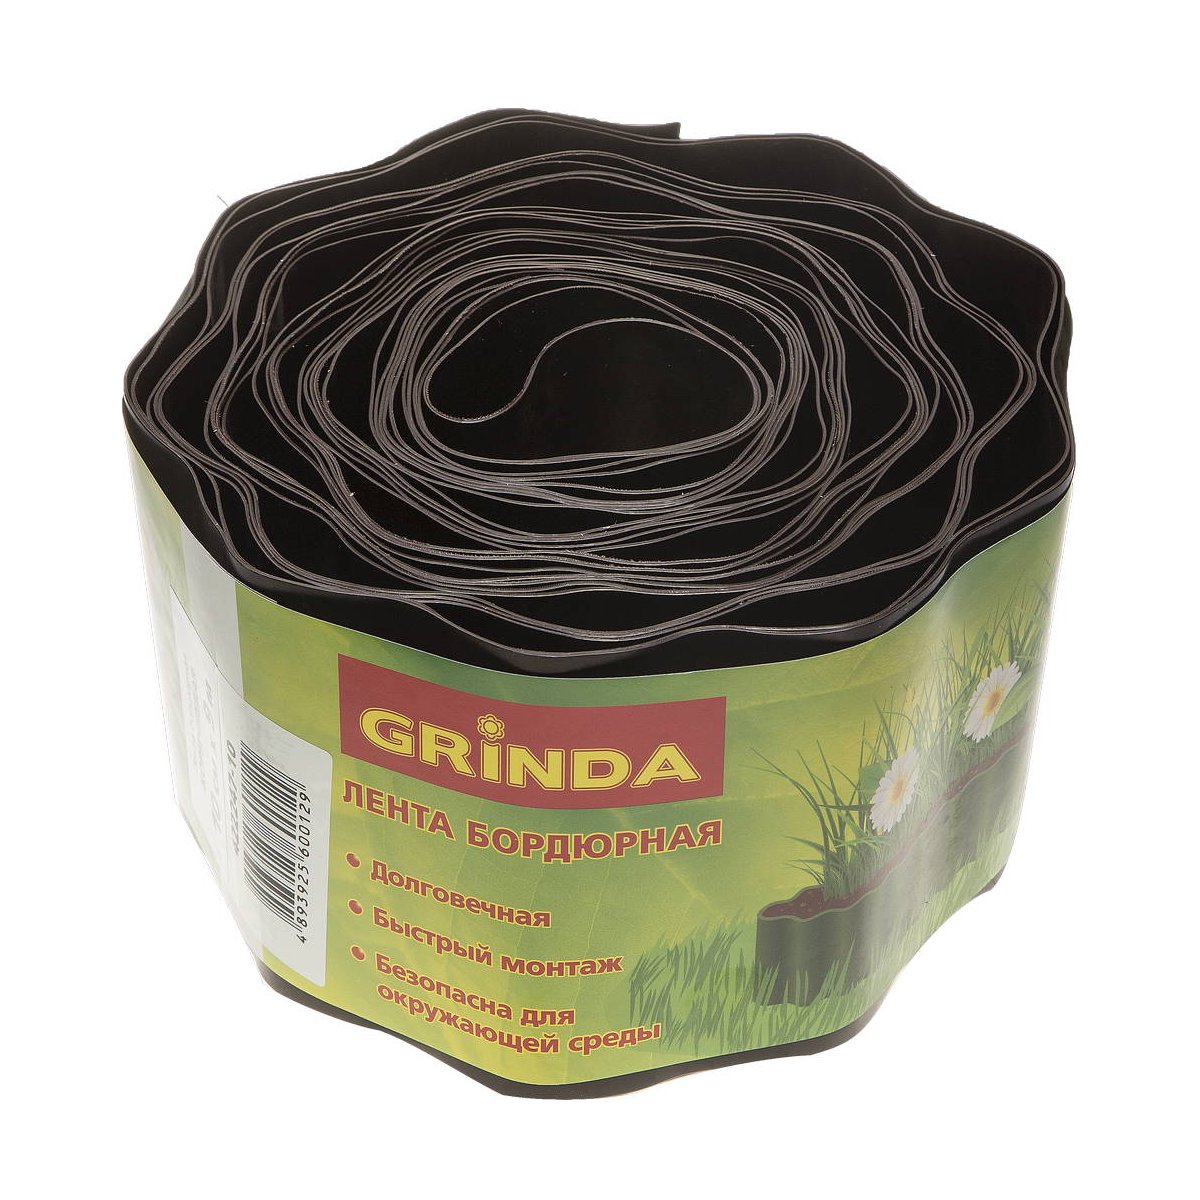 Бордюрная лента GRINDA 10 см х 9 м, коричневая (422247-10)